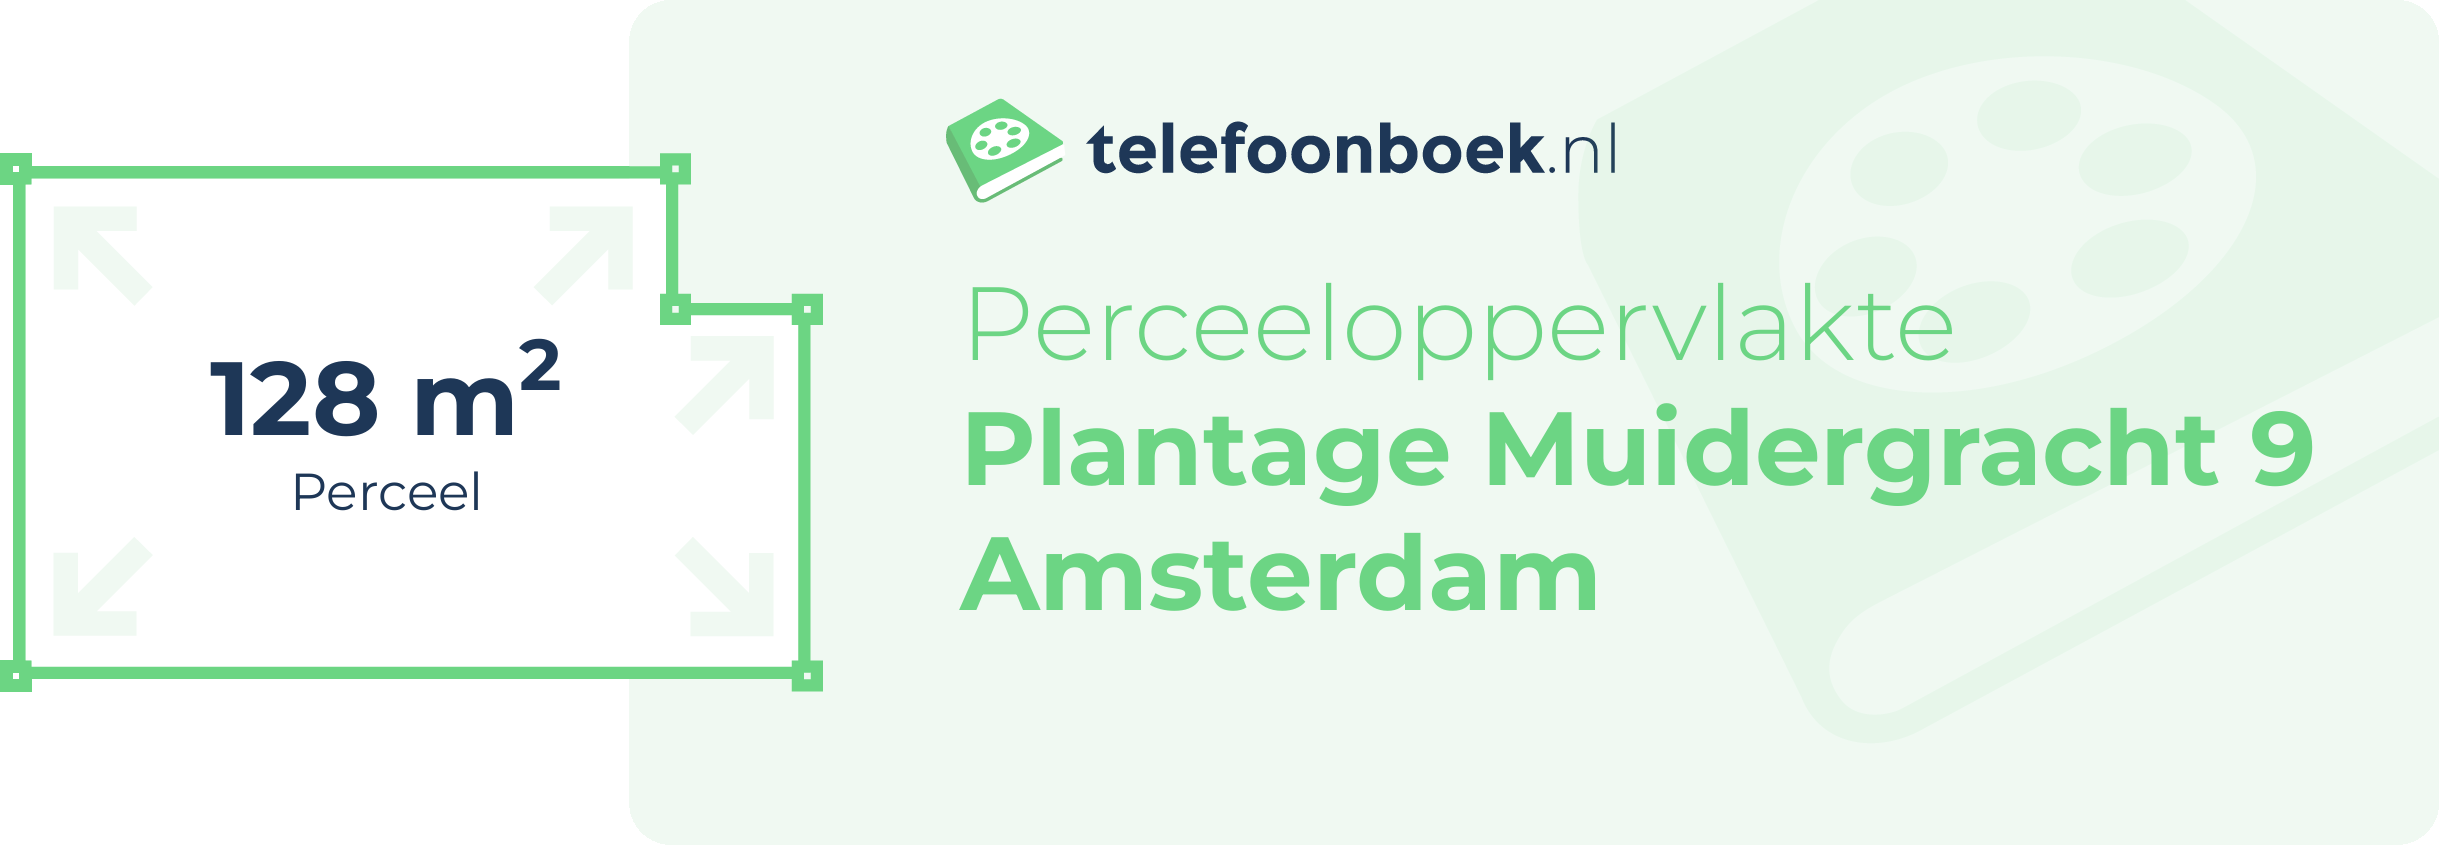 Perceeloppervlakte Plantage Muidergracht 9 Amsterdam